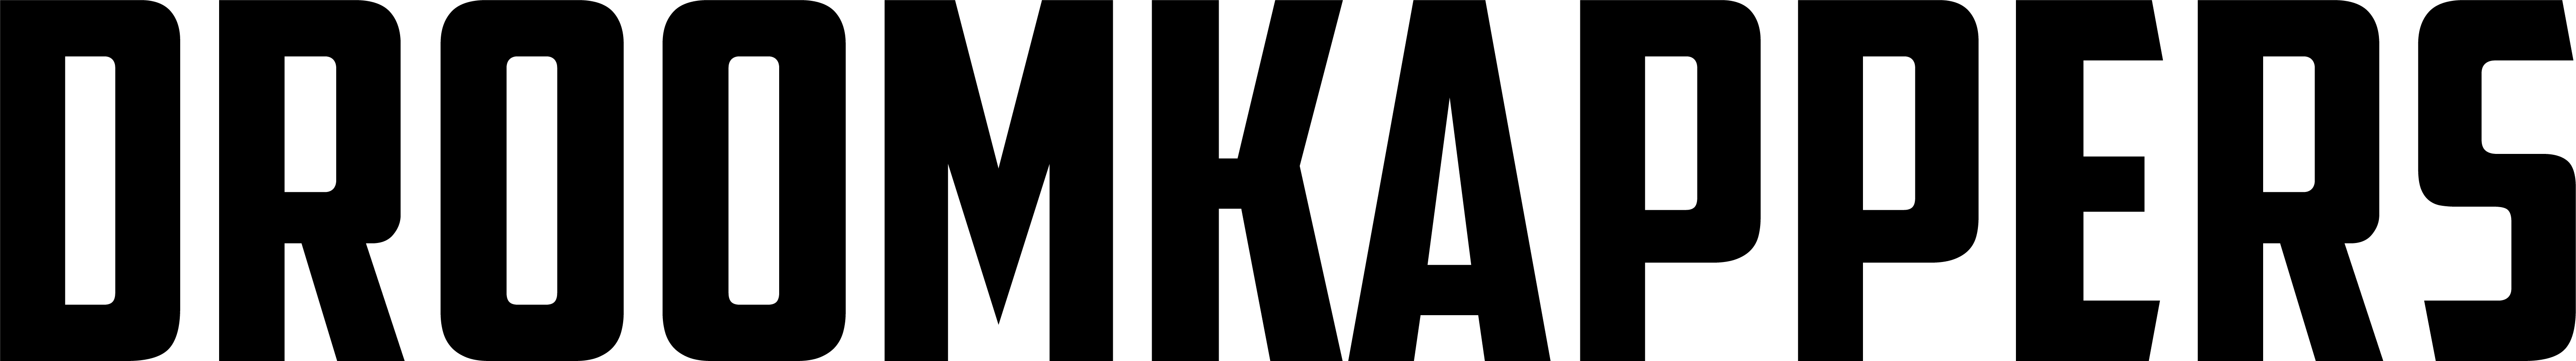 Droomkappers Logo